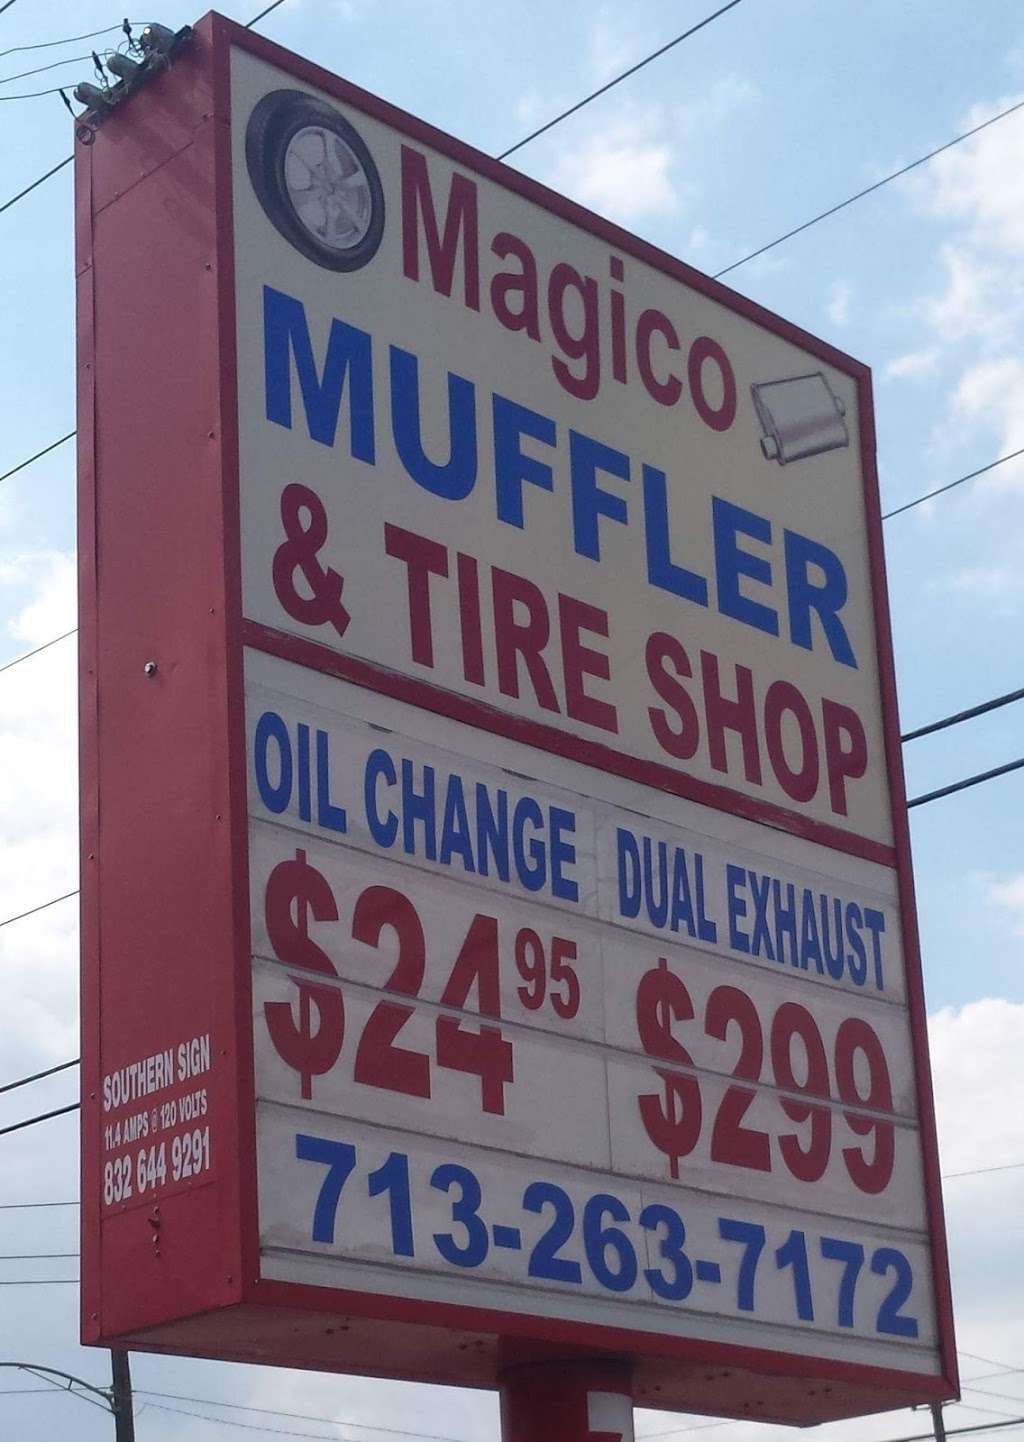 Magico Muffler & Tire Shop | 7019 Long Point Rd, Houston, TX 77055, USA | Phone: (713) 263-7172